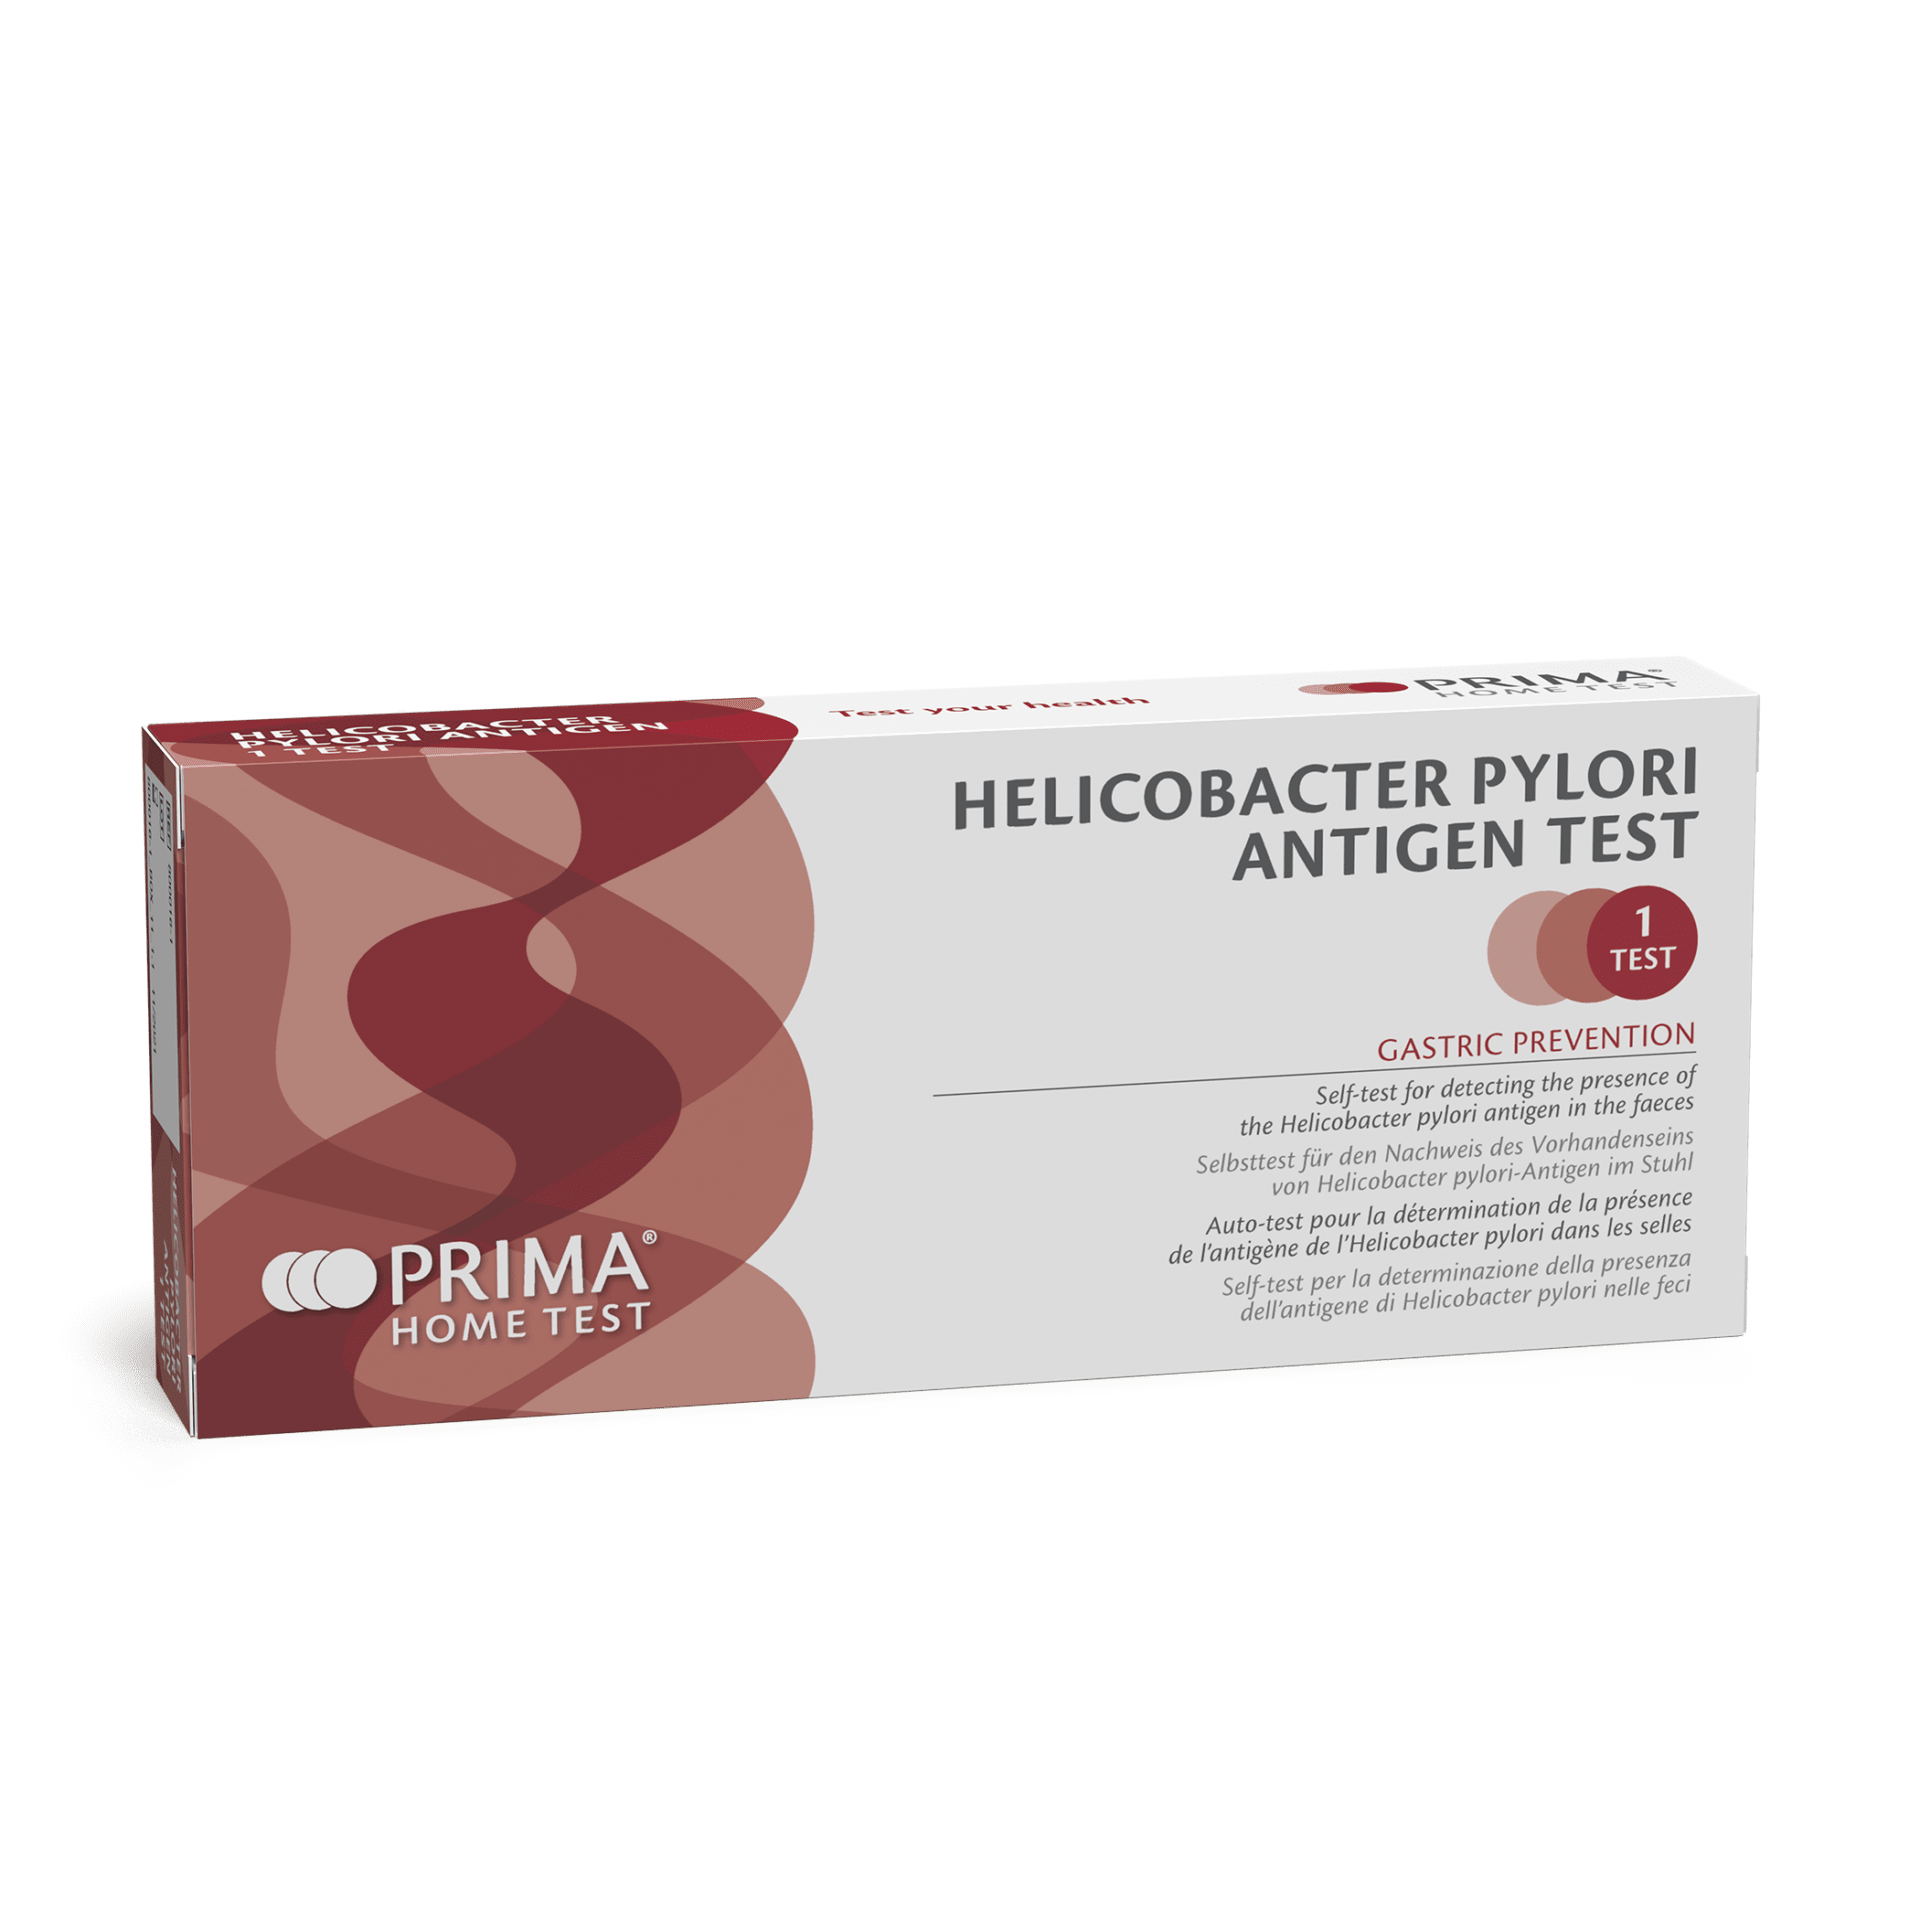 PRIMA Test Kits PRIMA Helicobacter Pylori Antigen Test | healthy.co.nz